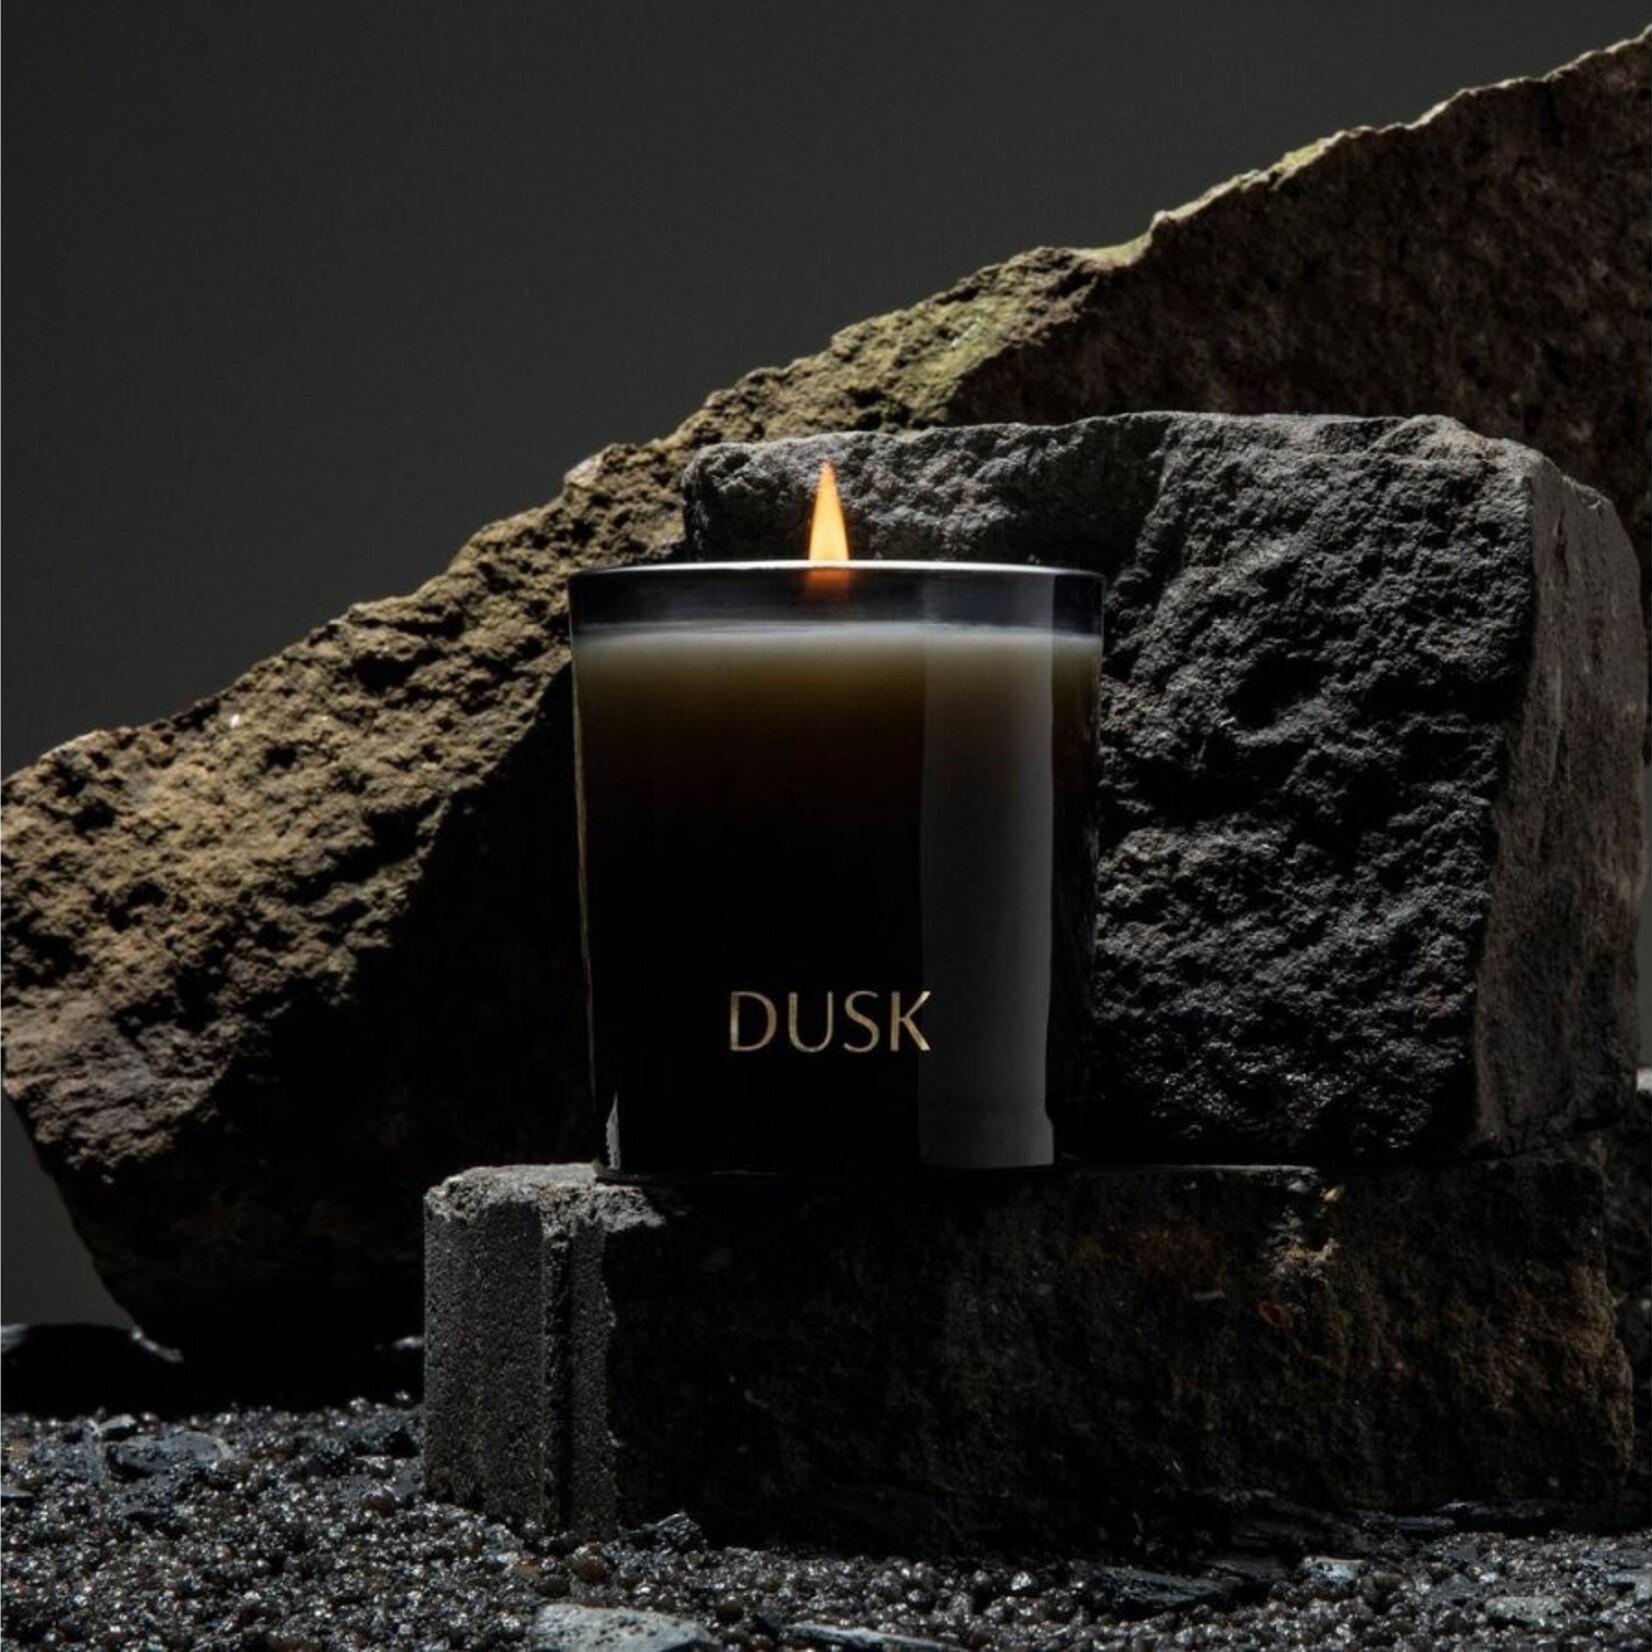 Essence of Harris Dusk Soy Wax Candle